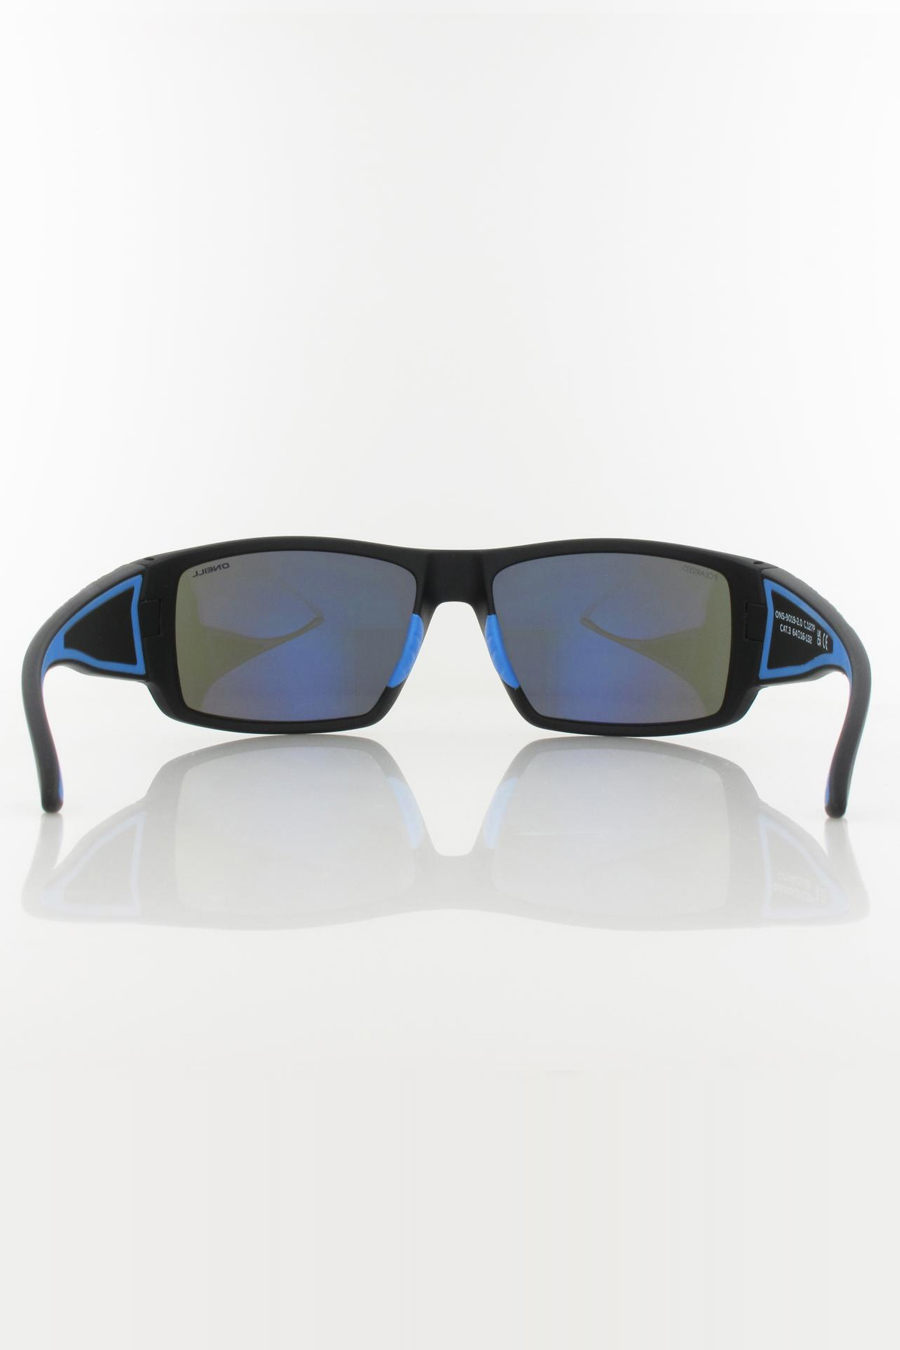 Sunglasses ONEILL ONS-9019-20-127P